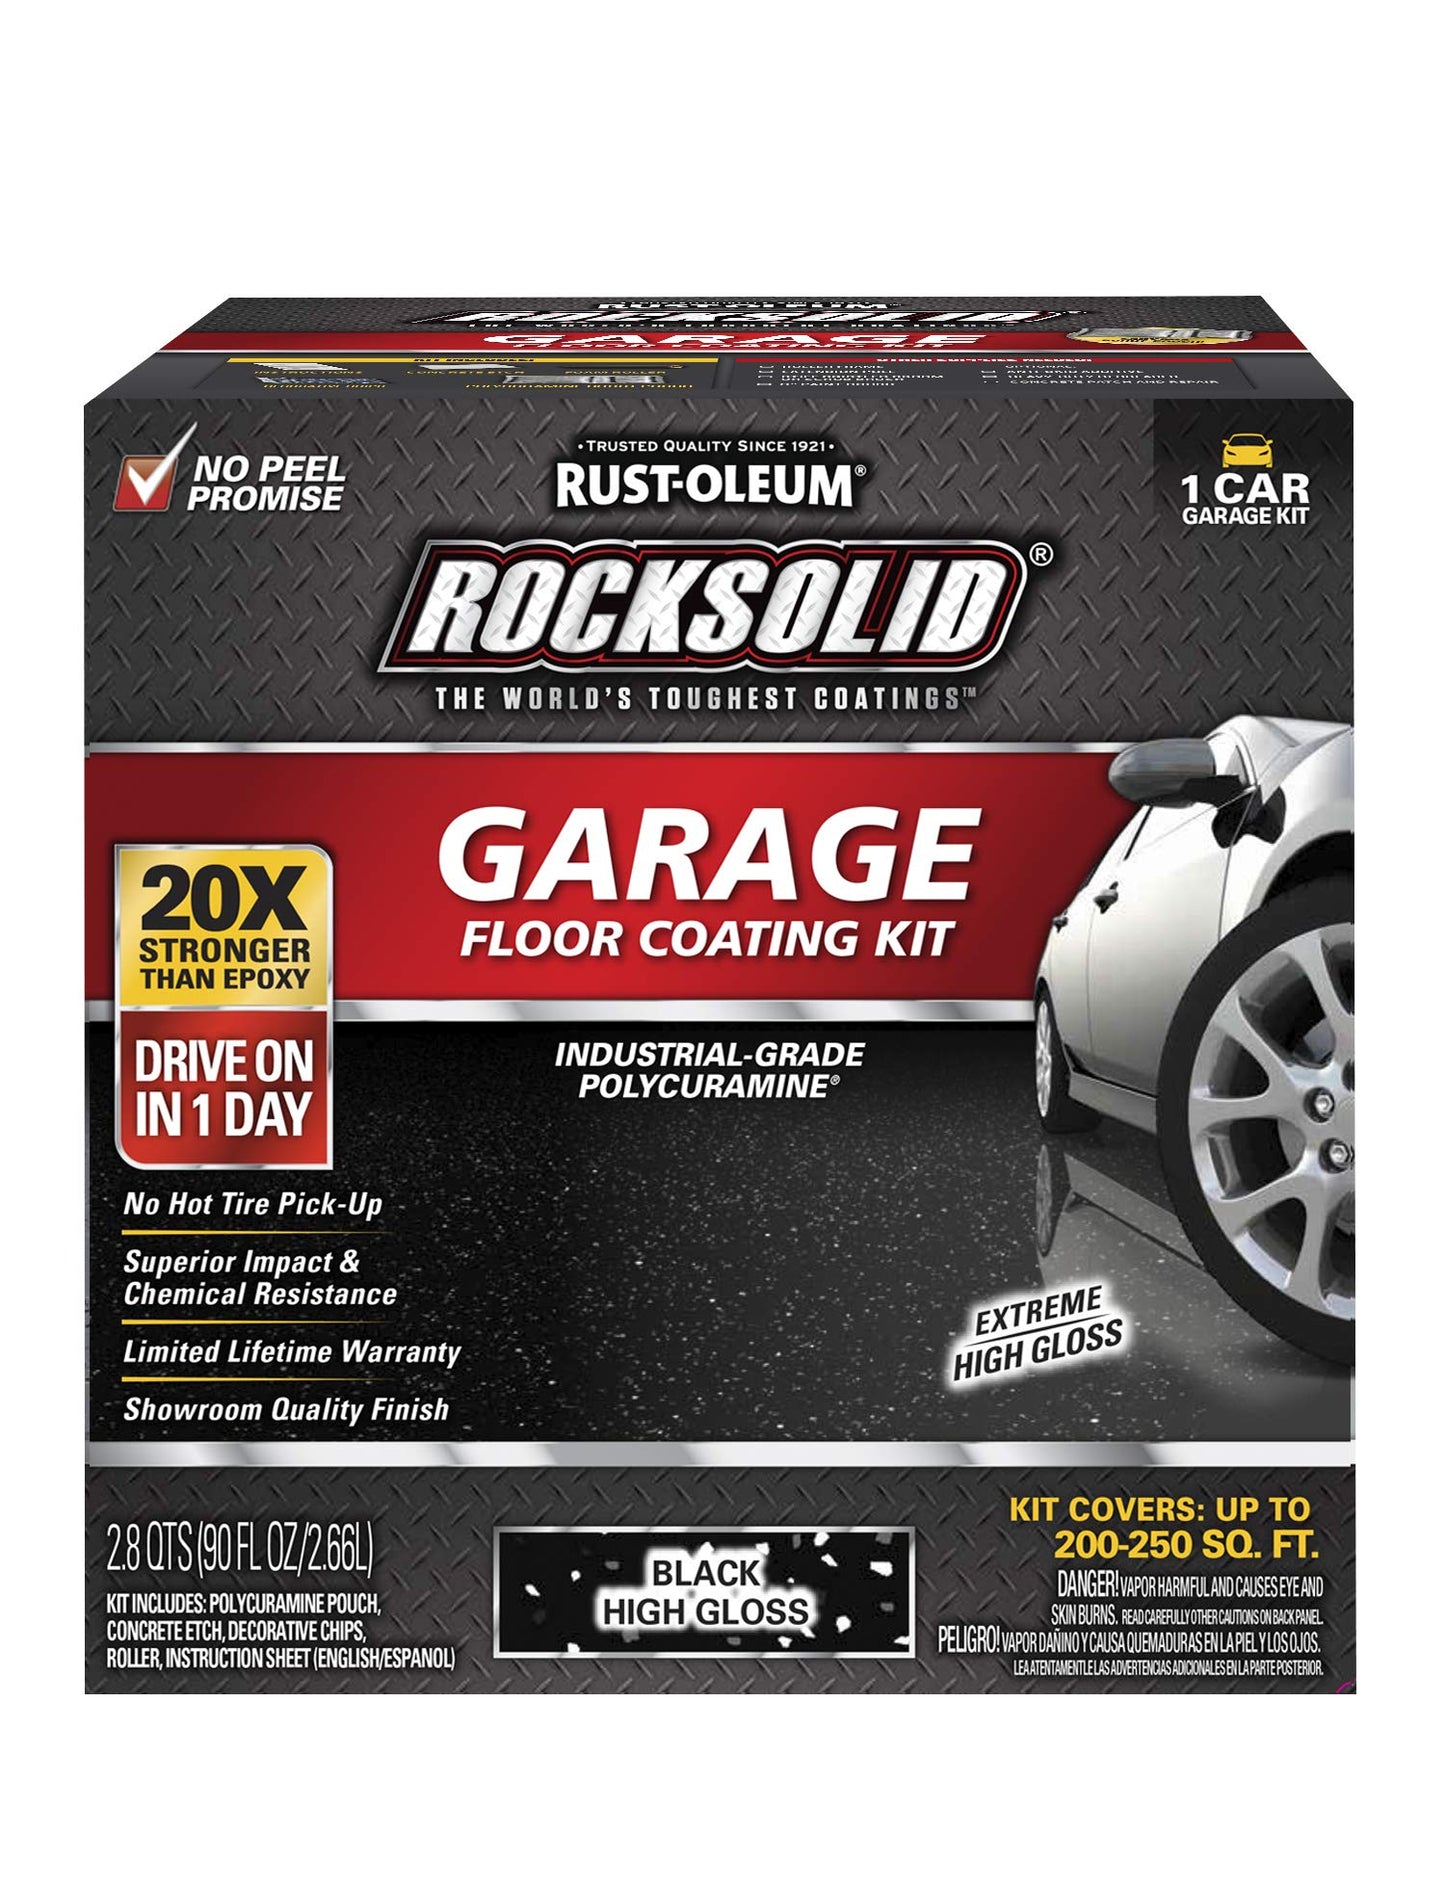 Rust-Oleum 318712 Rocksolid Polycuramine Garage Floor Coating, 1 Car Kit, Black